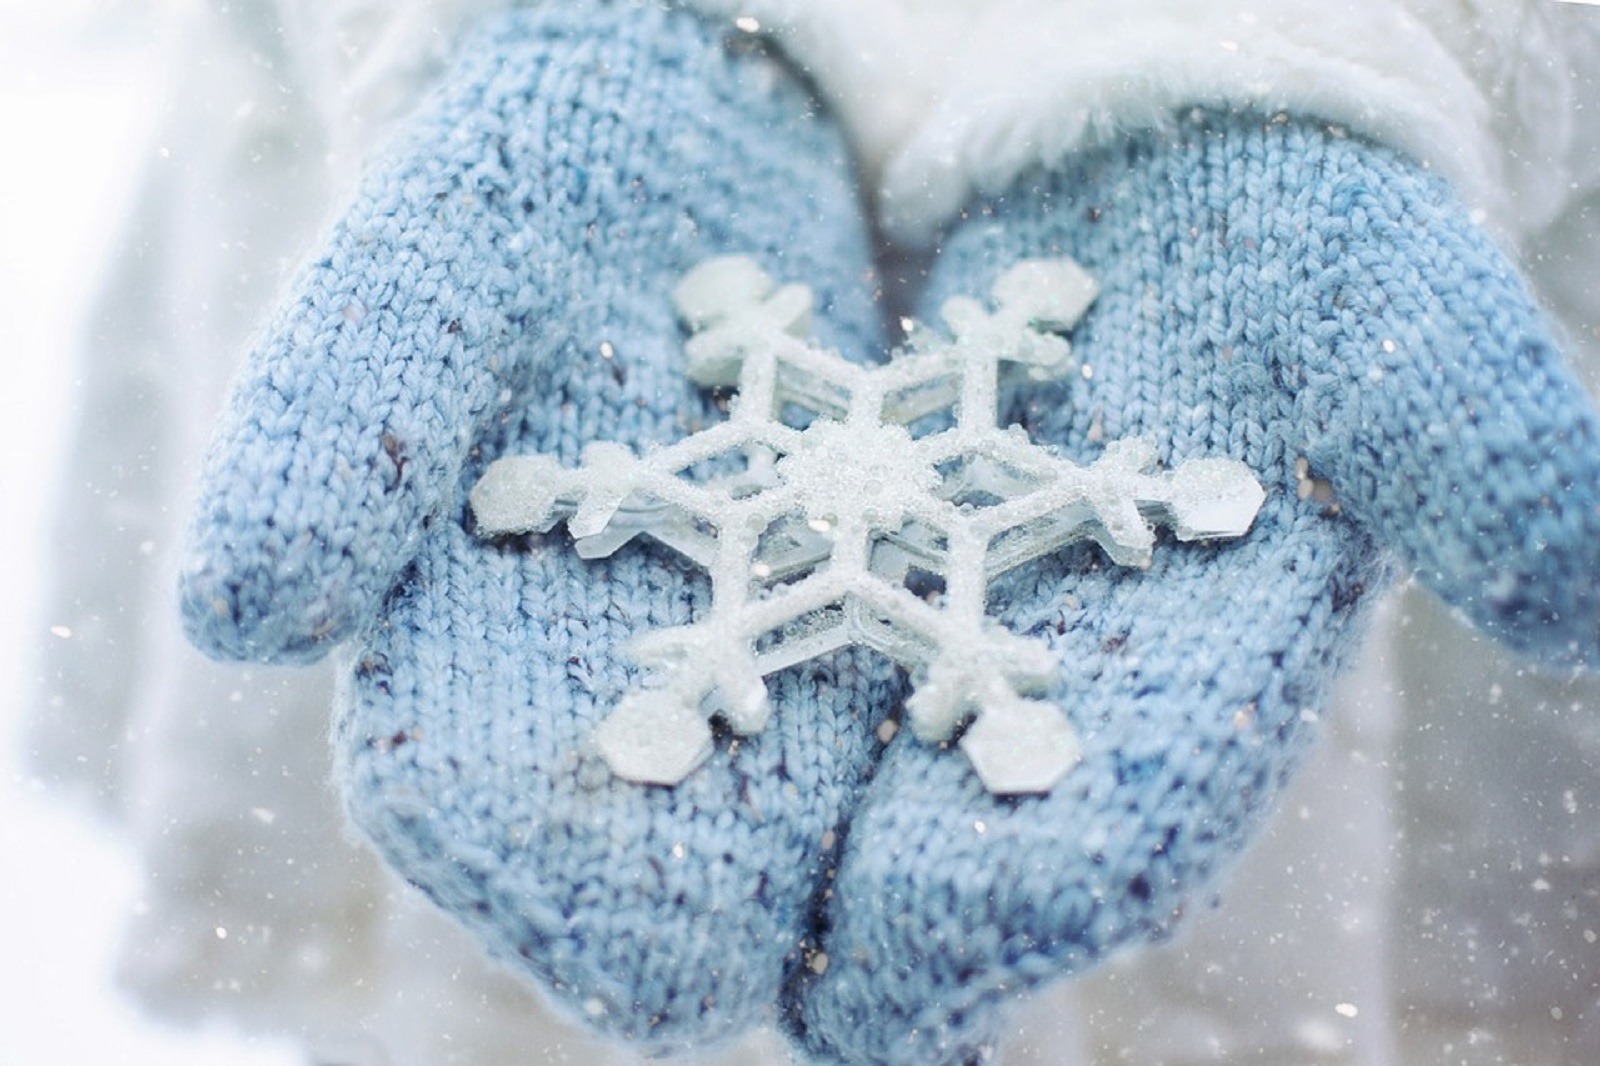 Winterfoto sneeuwvlok en handschoenen